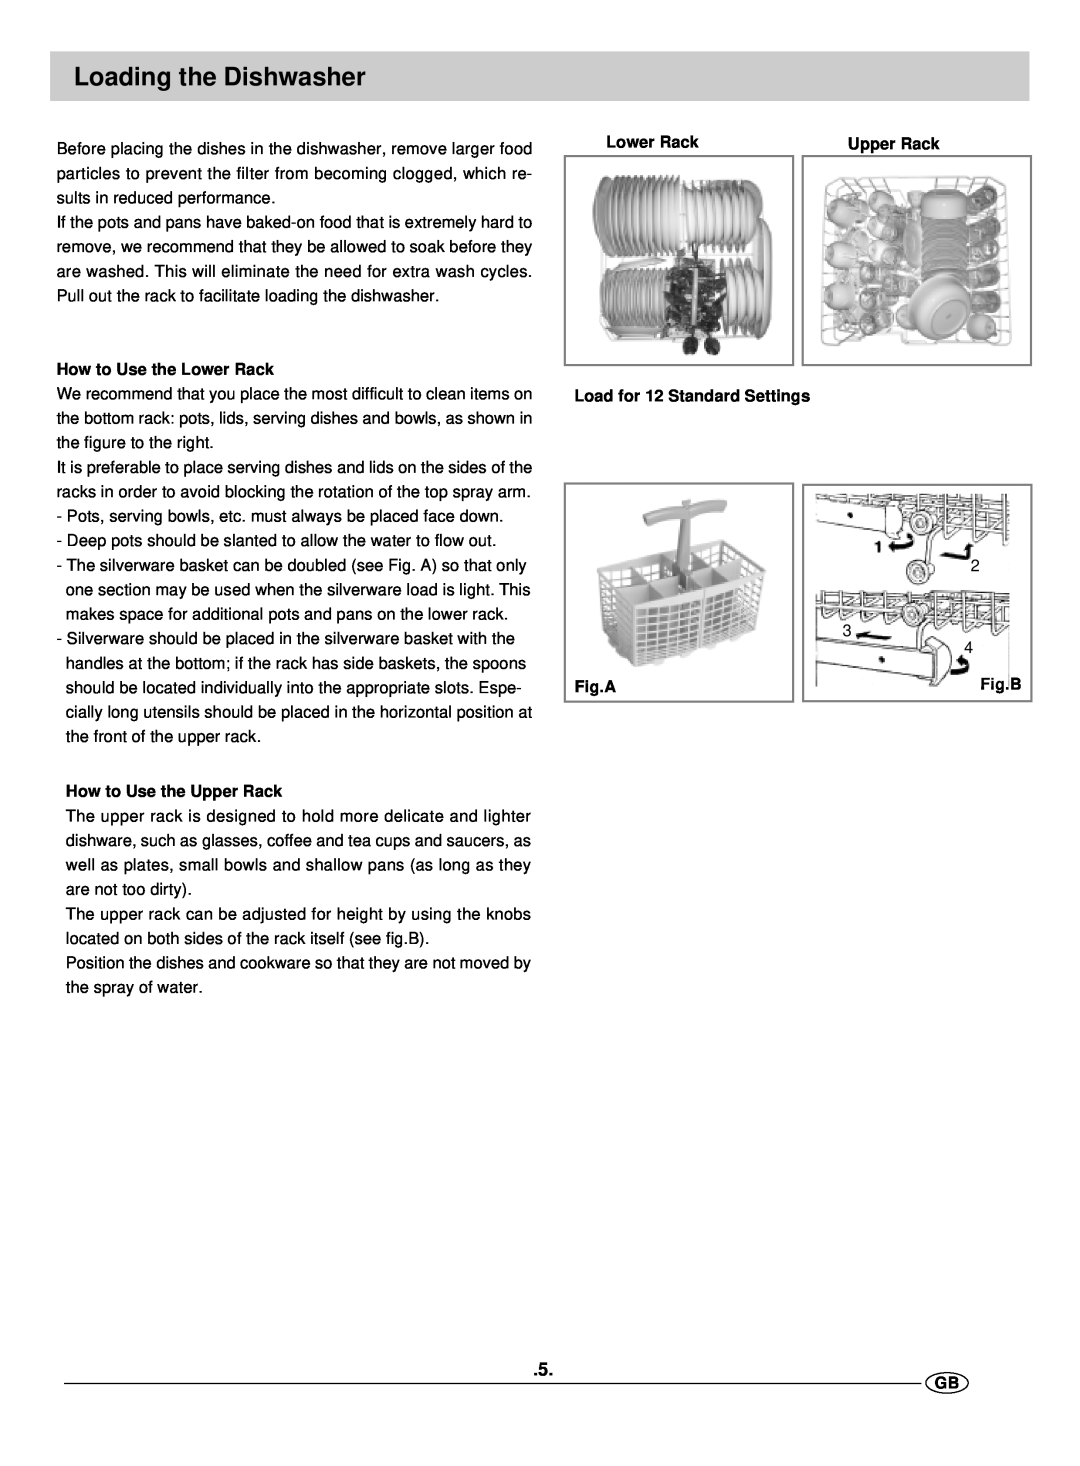 Haier DW12-EFMS manual Loading the Dishwasher, How to Use the Lower Rack, How to Use the Upper Rack, Fig.A, Fig.B 